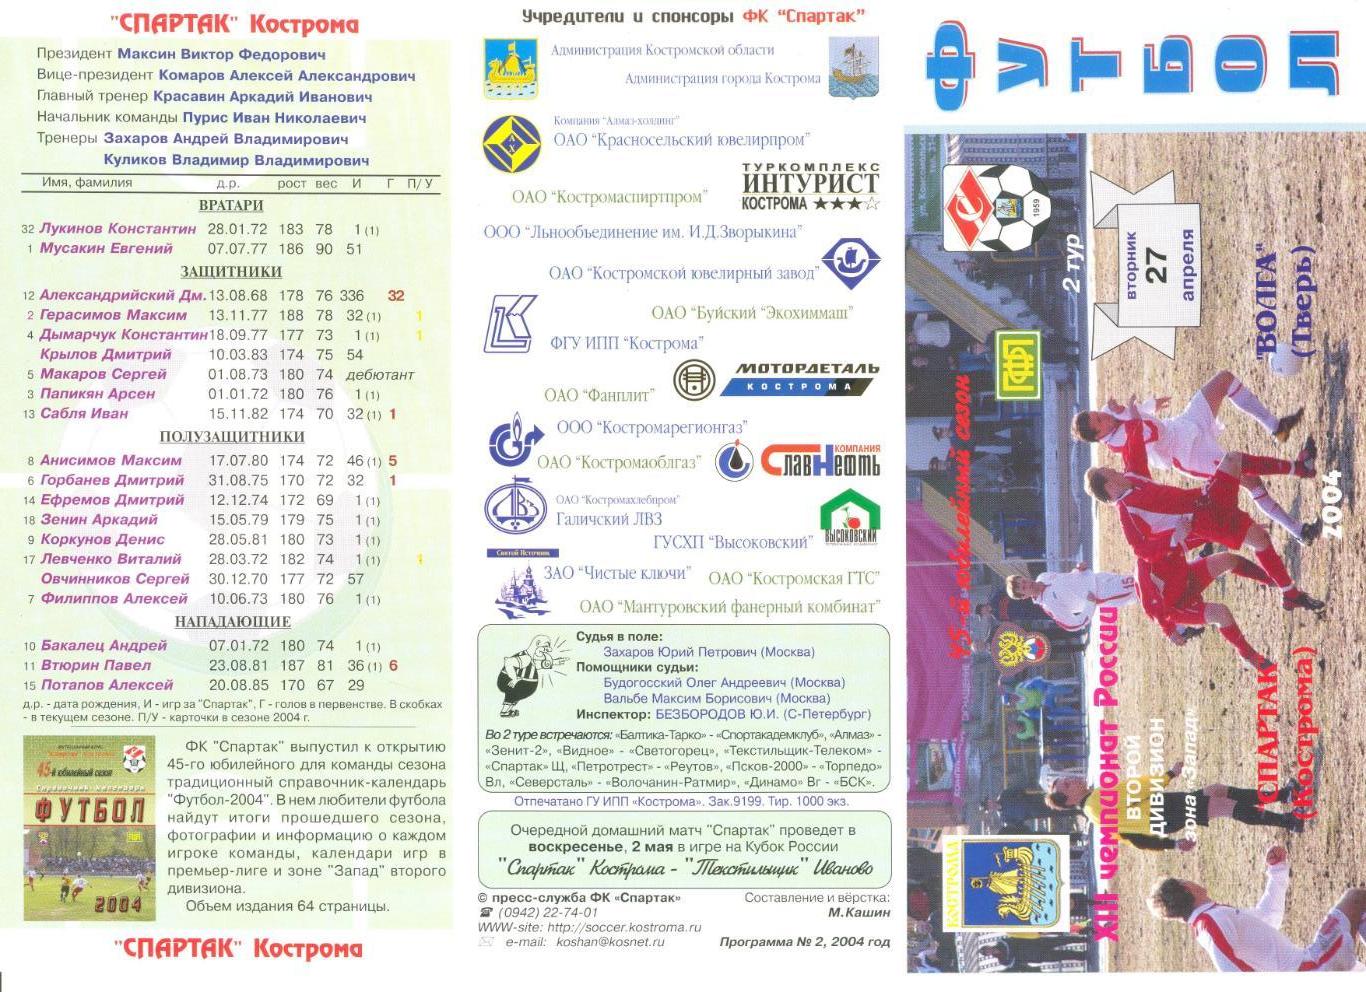 Спартак Кострома - Волга Тверь 27.04.2004 г.